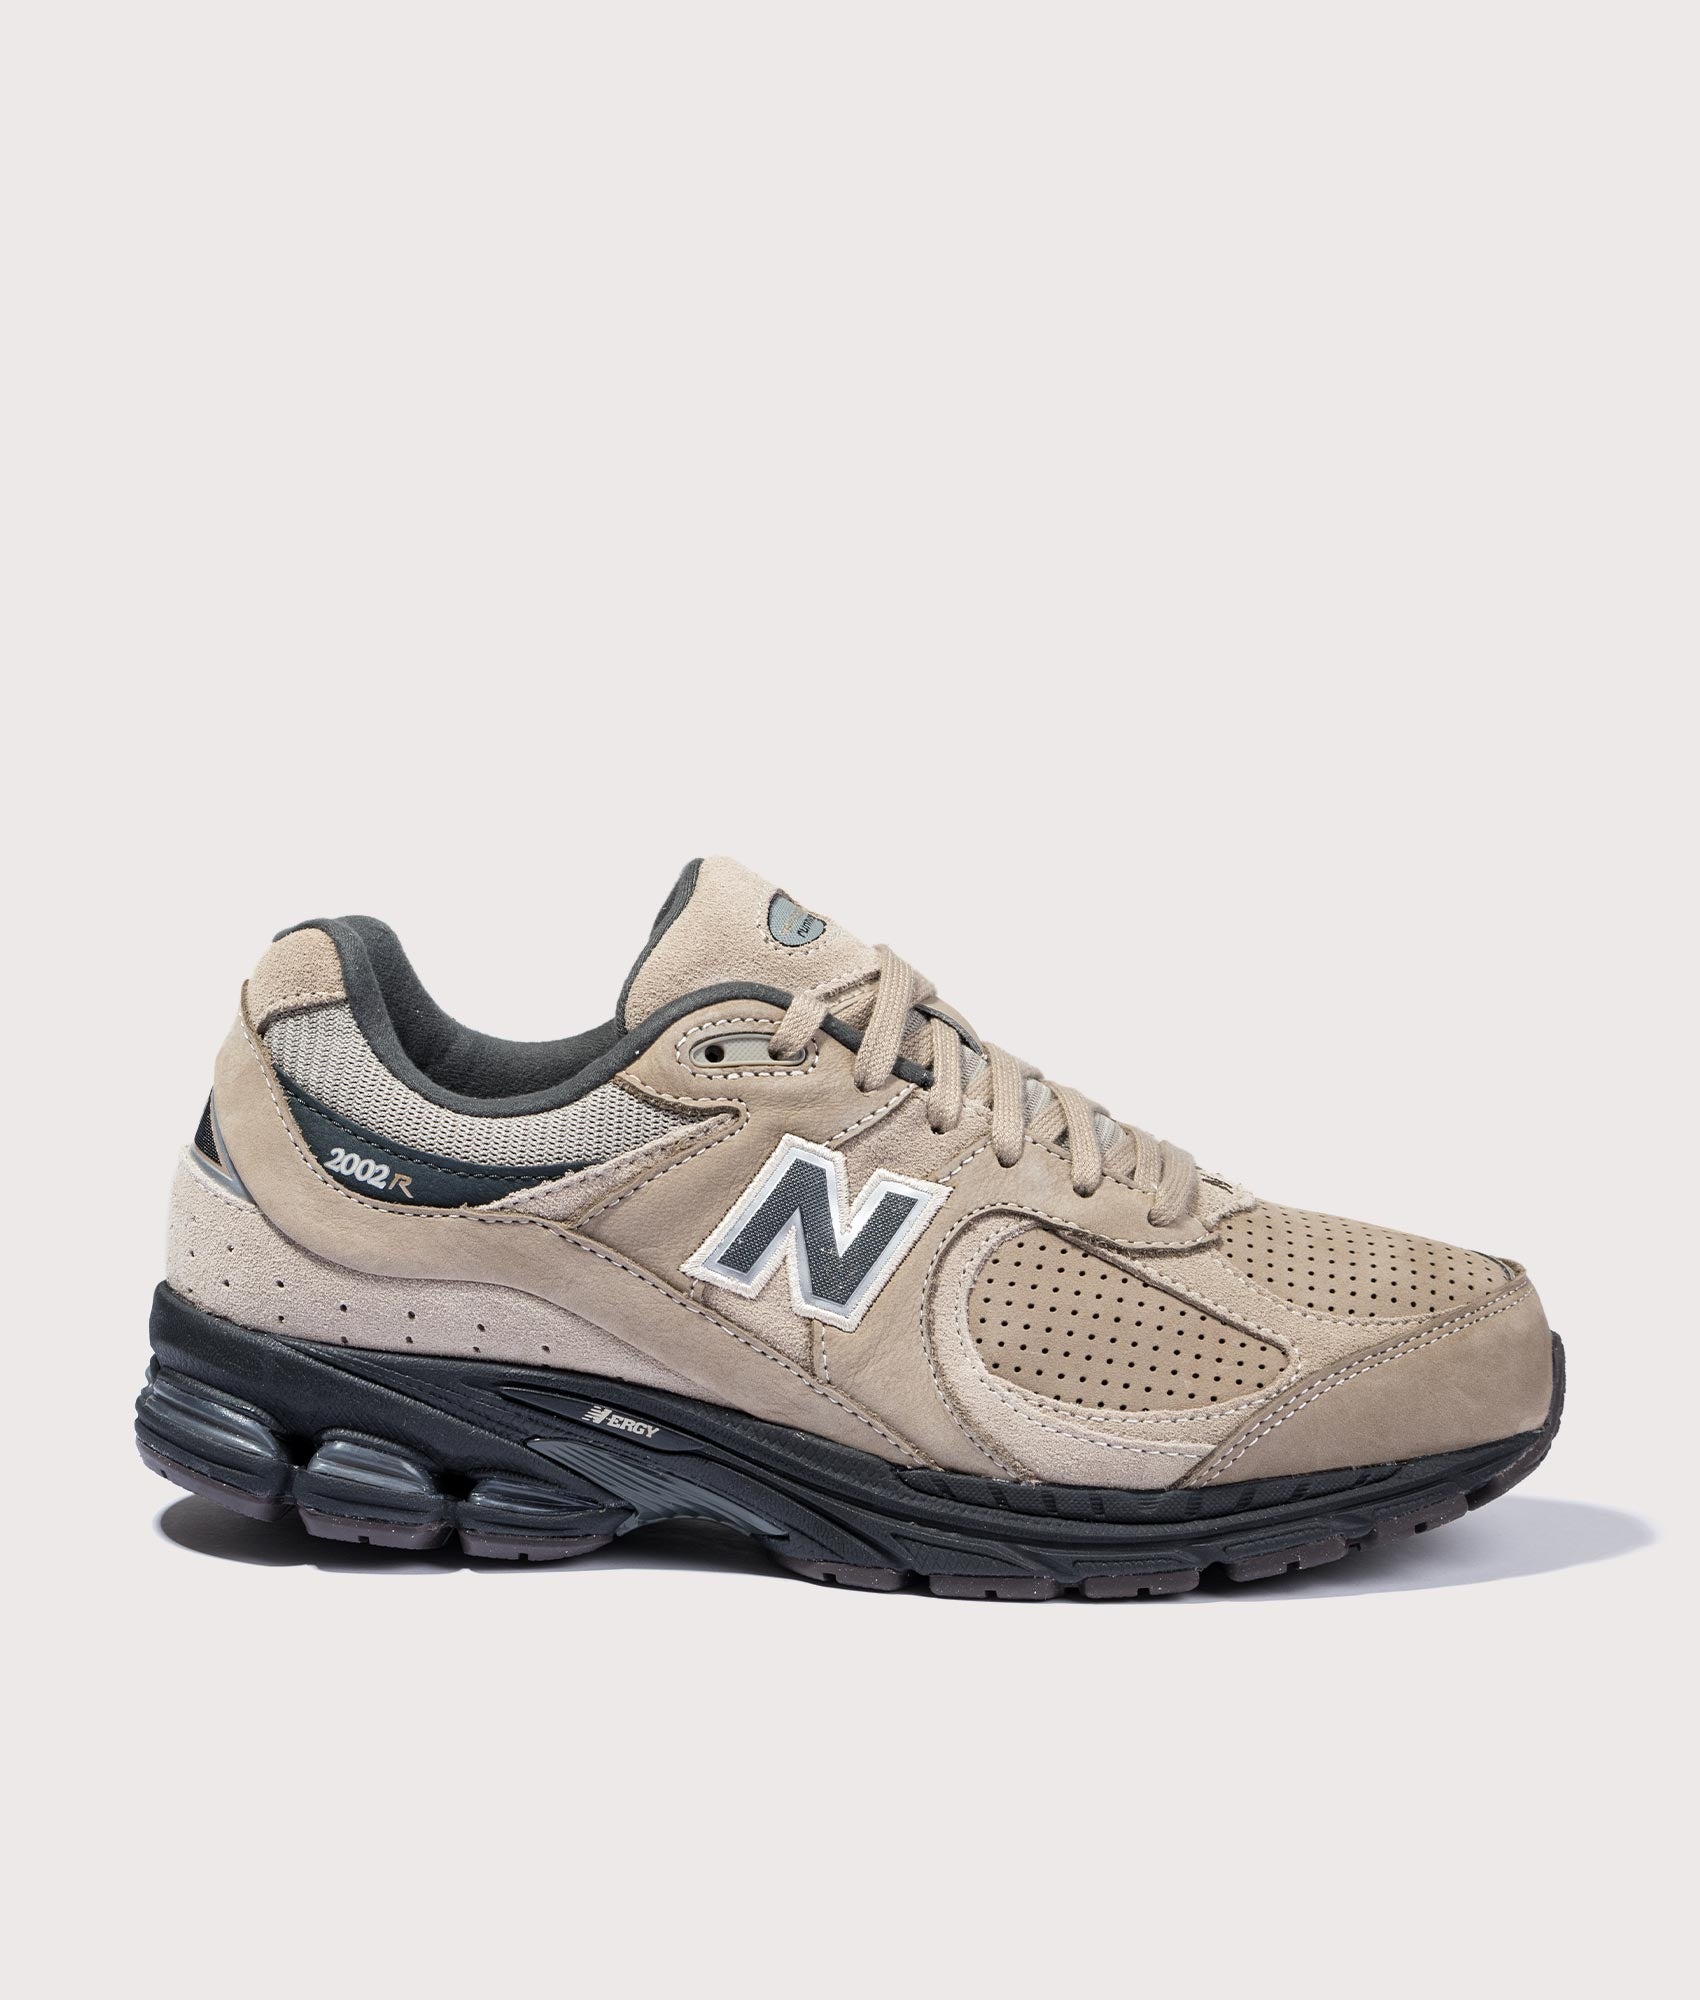 New Balance Mens 2002R Sneakers - Colour: M2002REG Driftwood - Size: 8